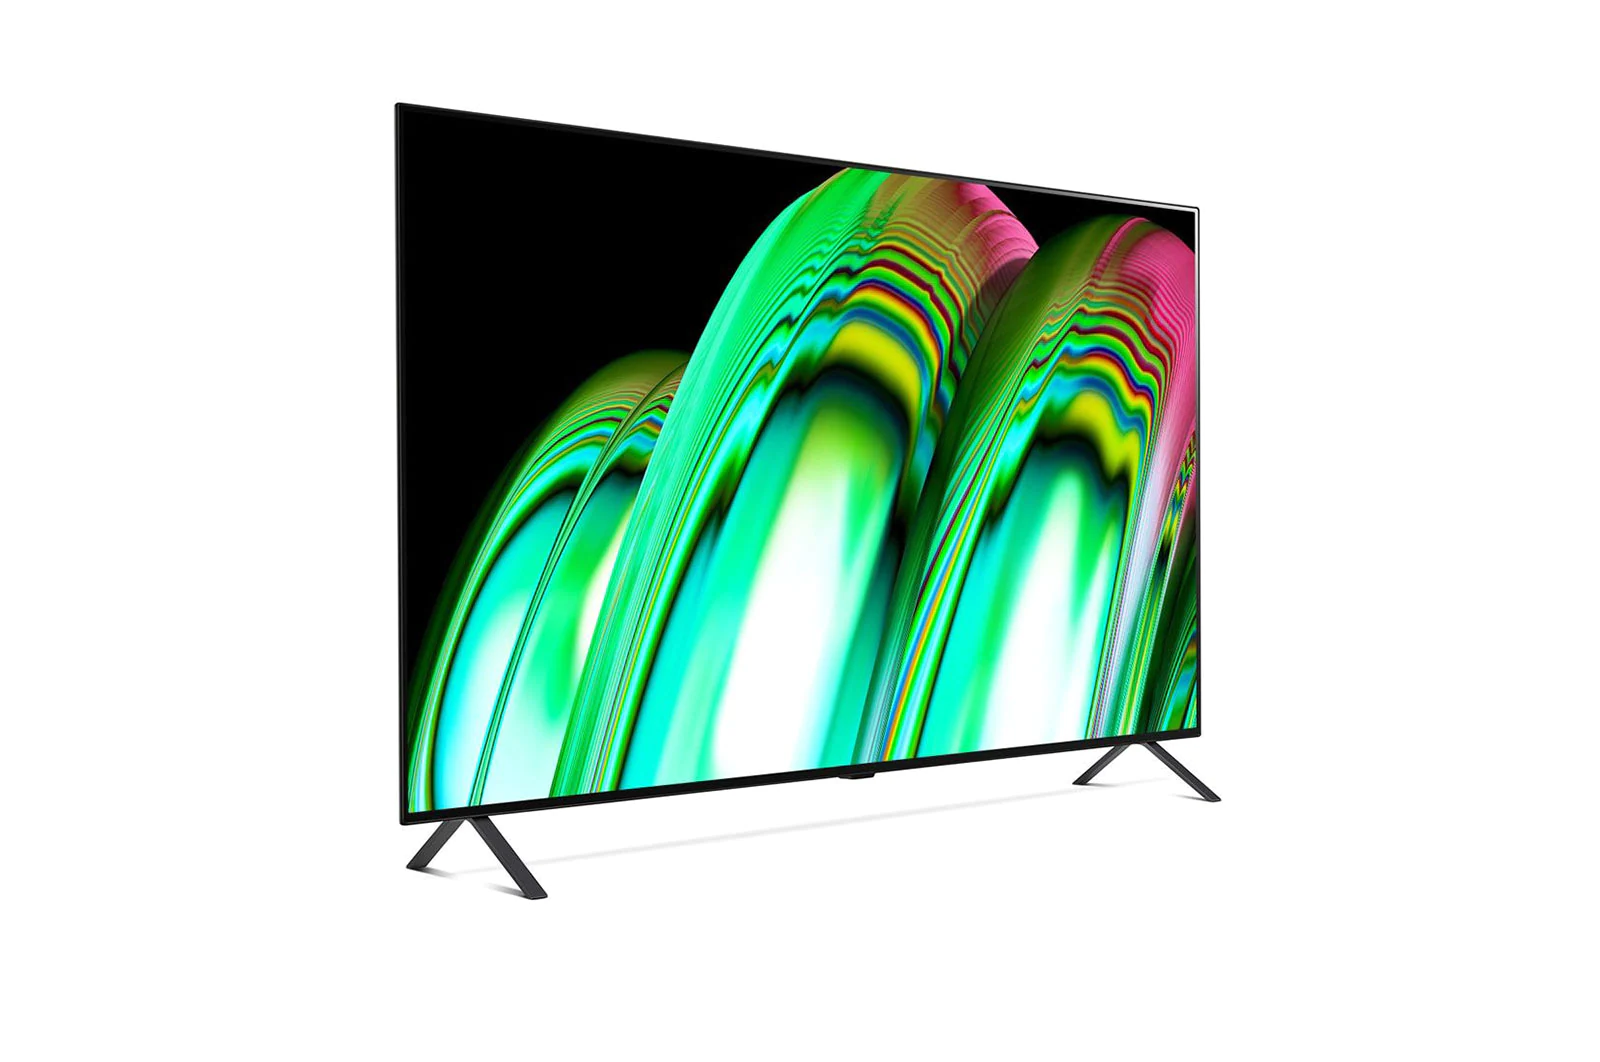 LG OLED TV (65 inch) with 4K Cinema HDR Cinema Screen Design